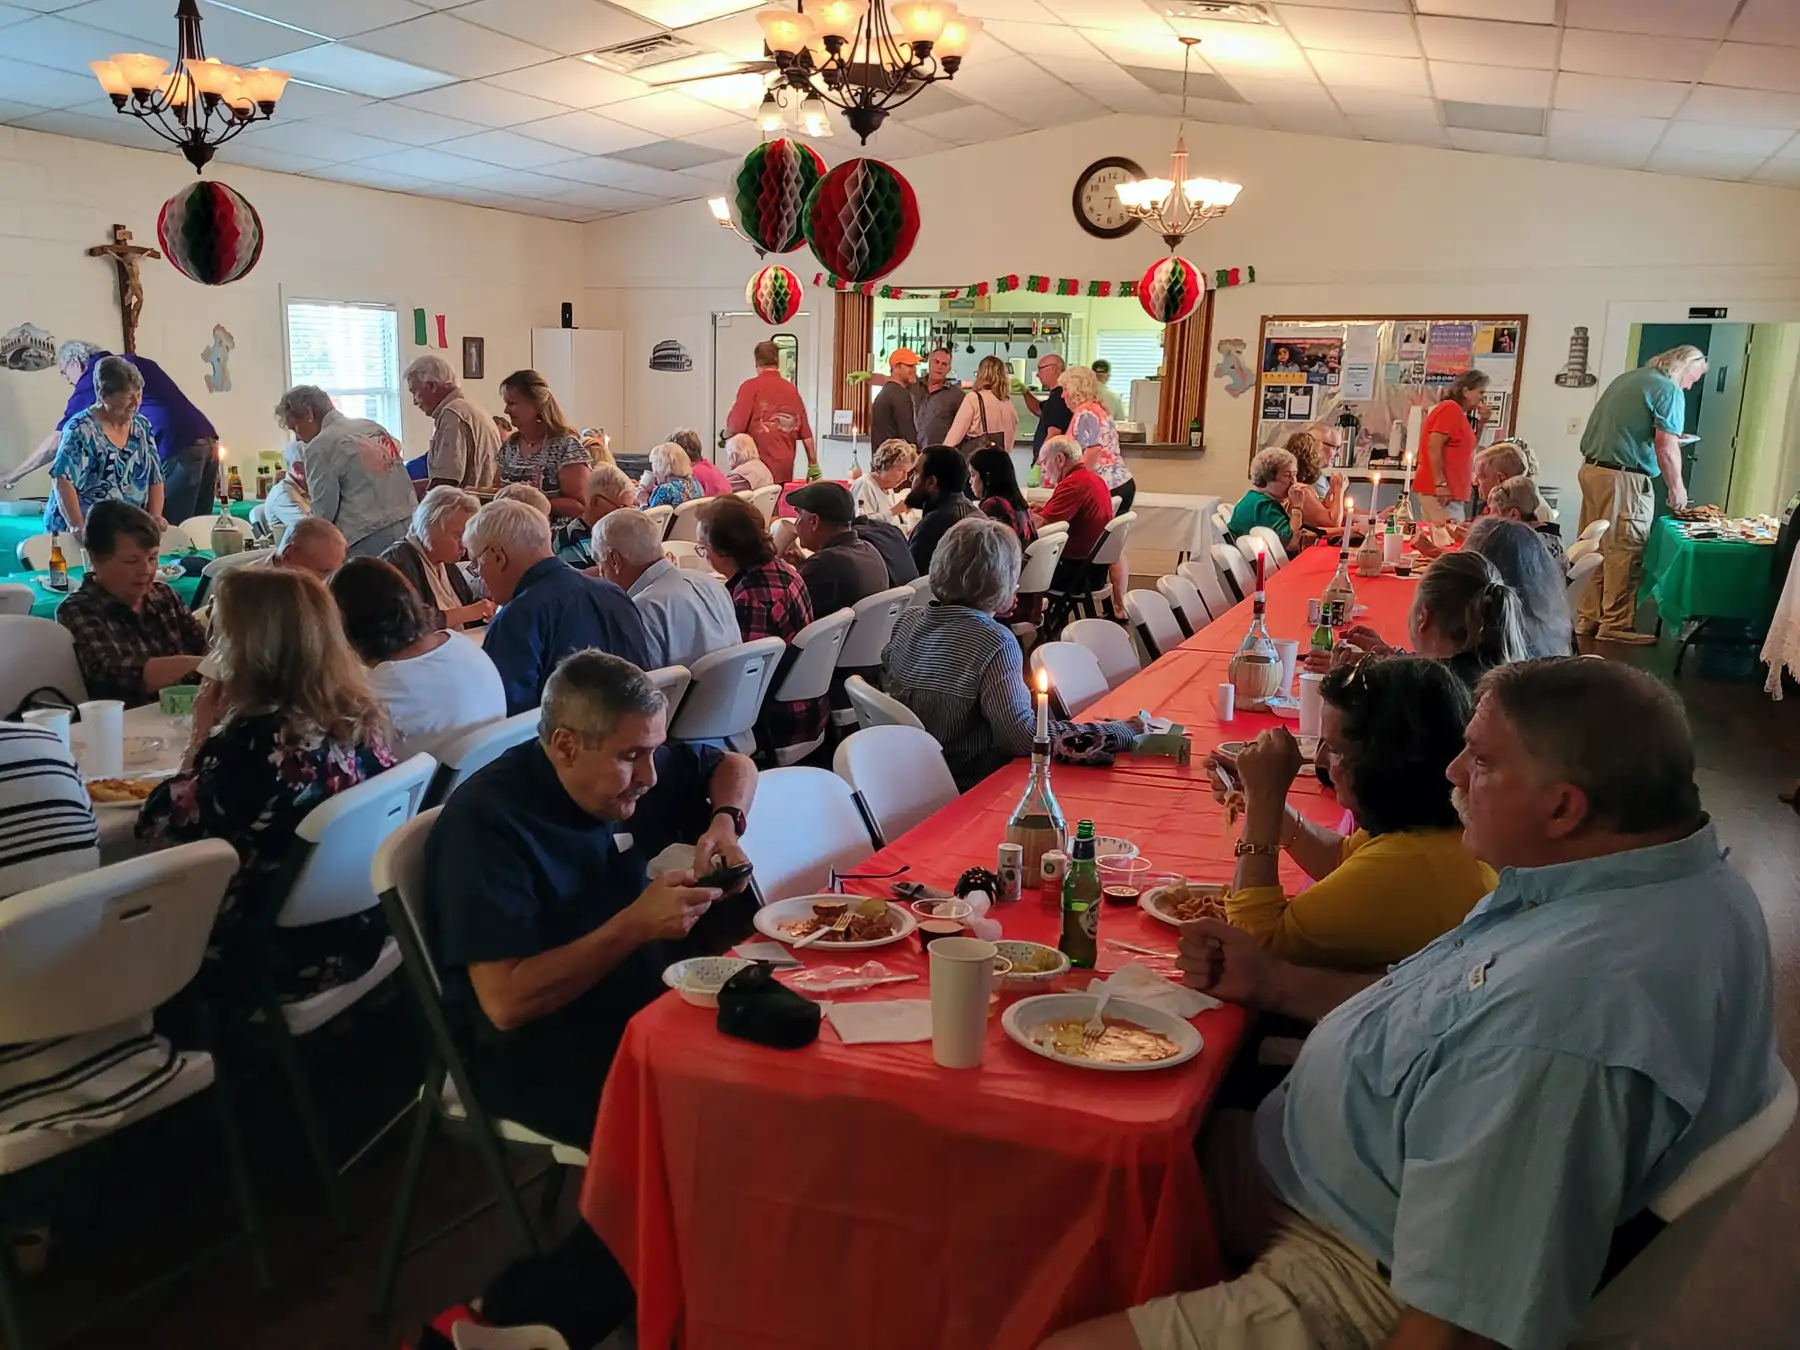 St. Joseph Annual Parish Spaghetti Dinner, hosted by the Men's Club